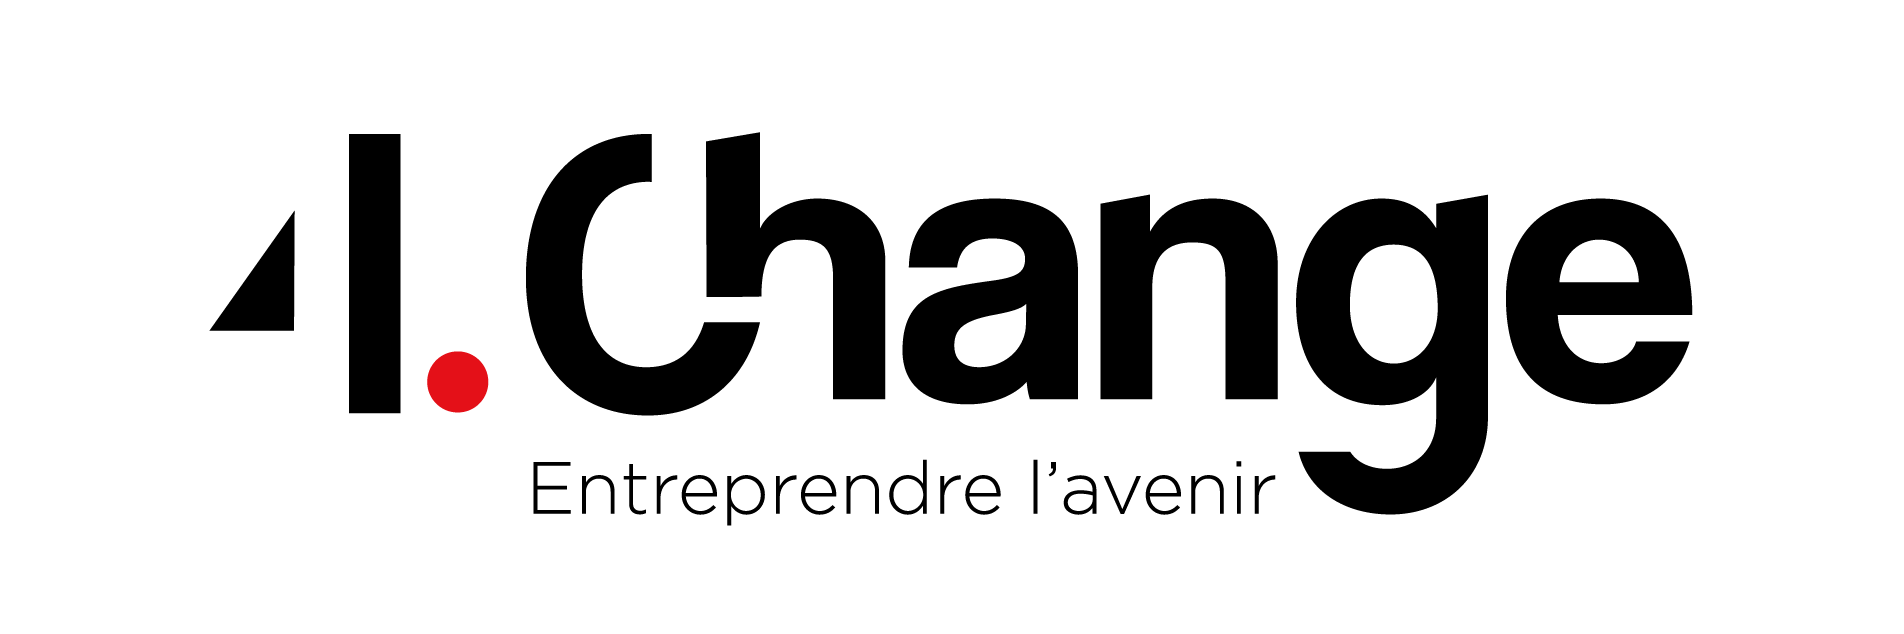 Logo 4Change